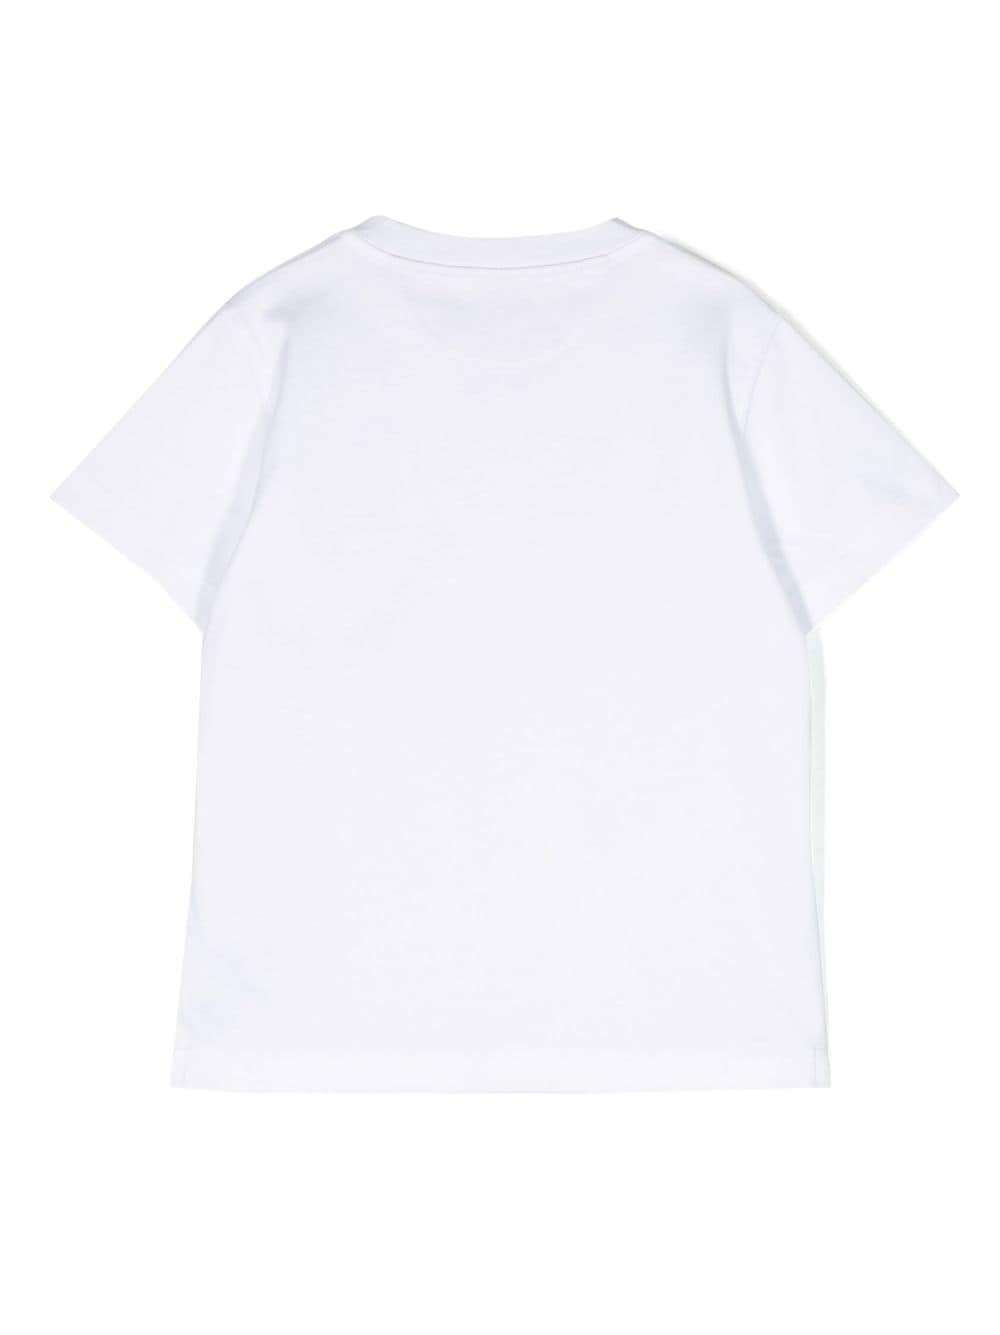 T-shirt bianca bambino con stampa